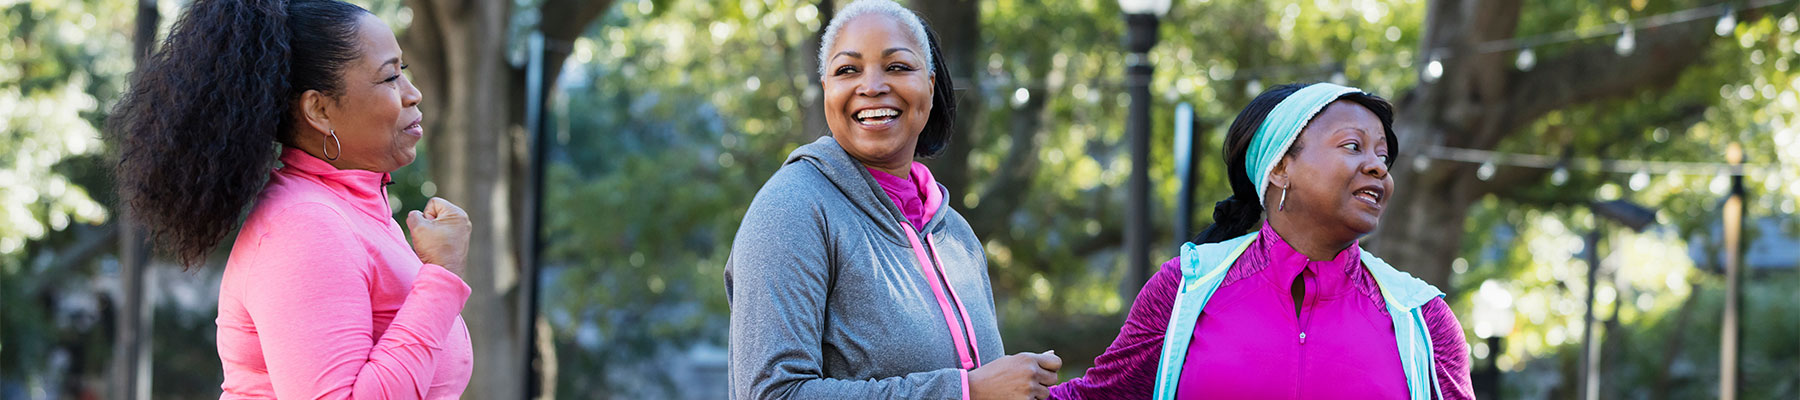 Women exercise to help prevent diabetes